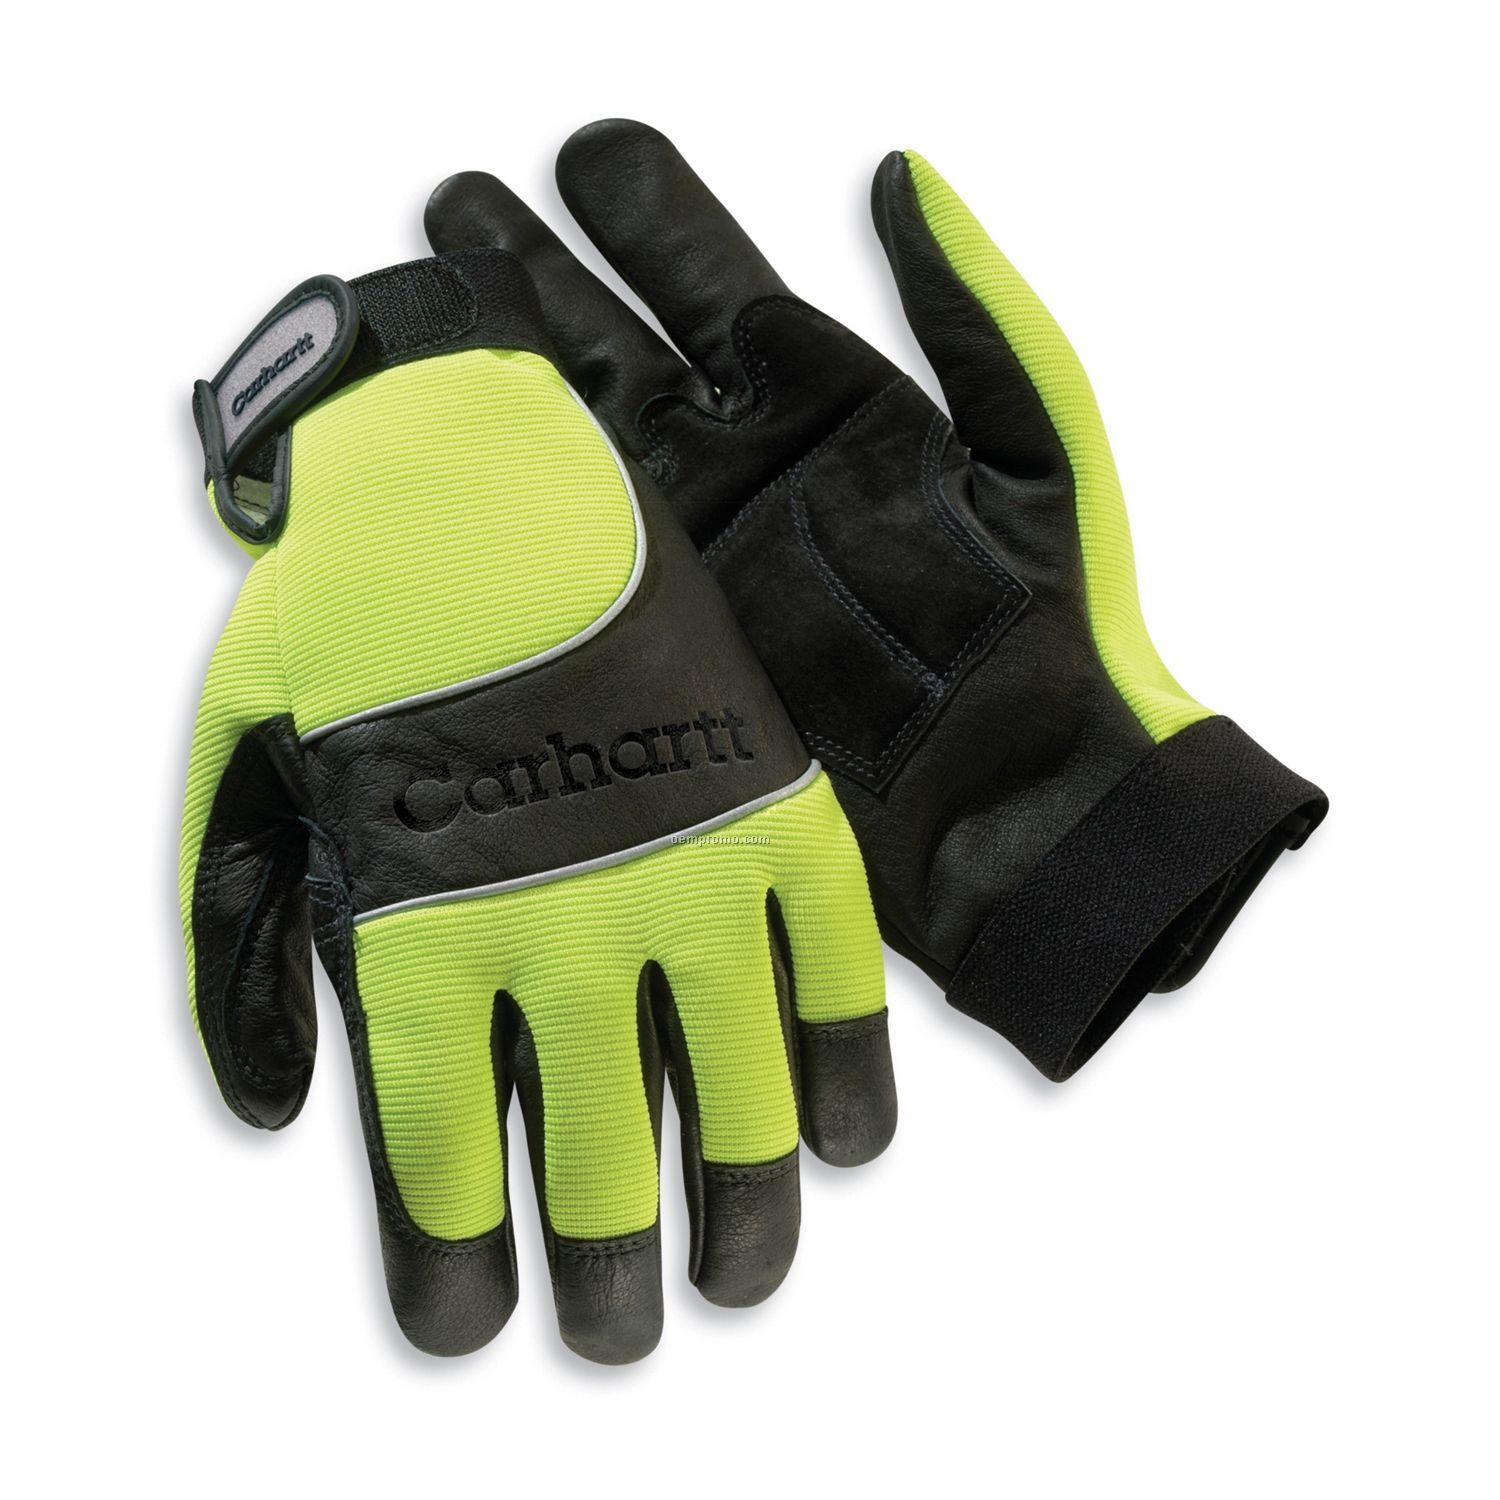 Carhartt Men's Enhanced Visibility Utility Glove